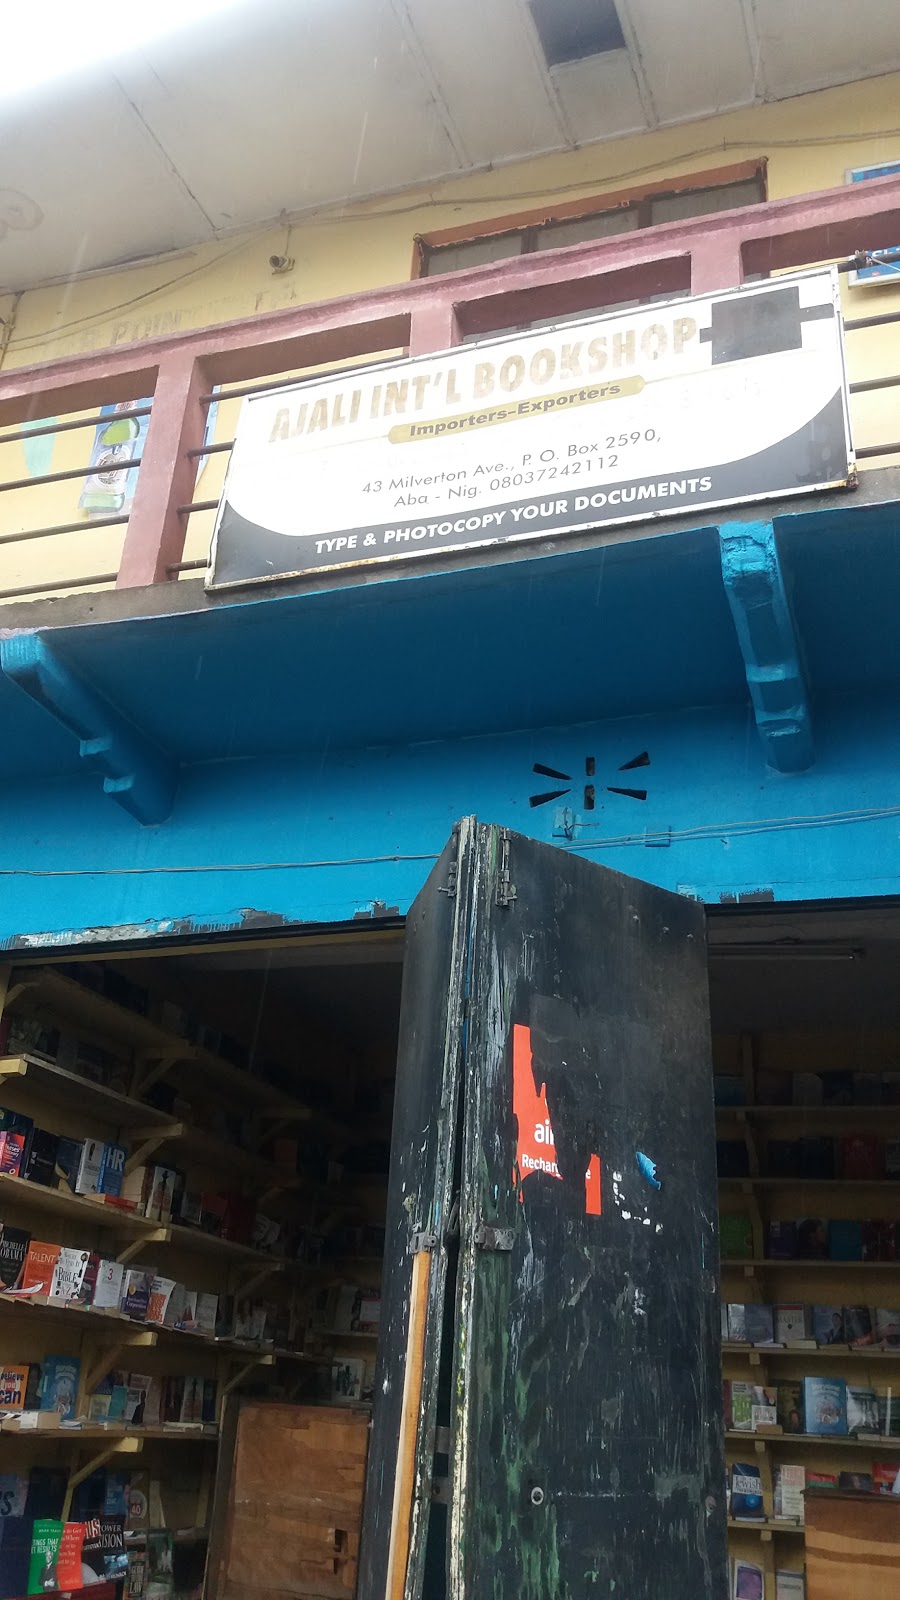 Ajali Intl Bookshop